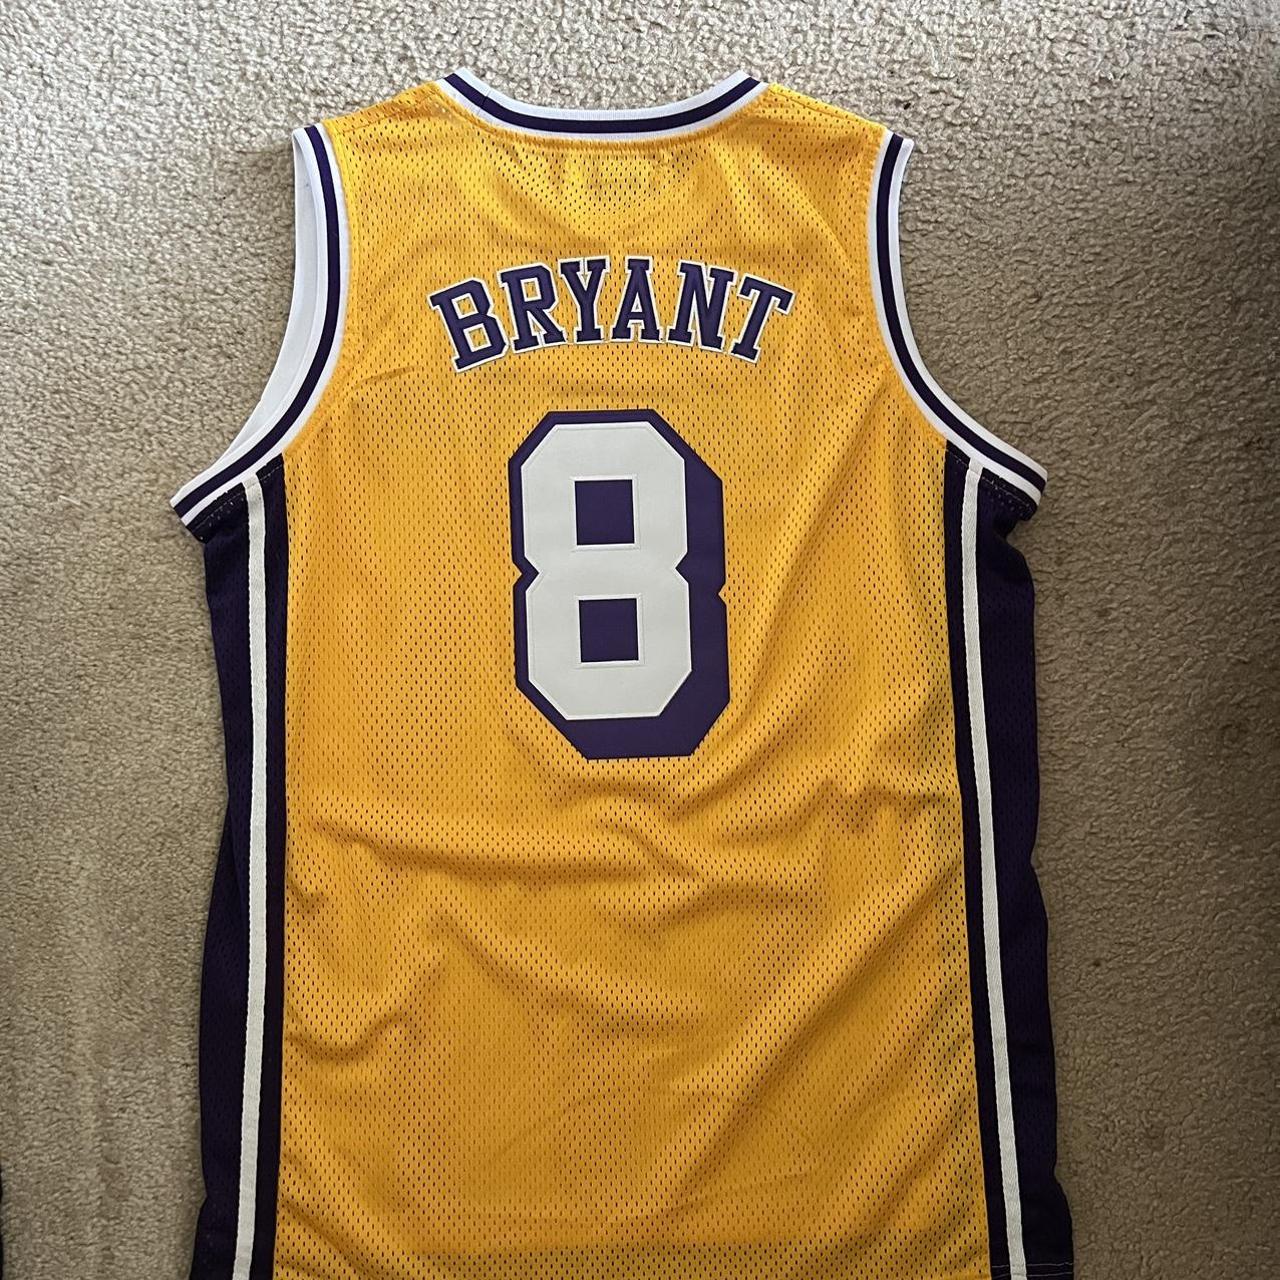 8 Crershaw Kobe Bryant Basketball Jersey • Kybershop